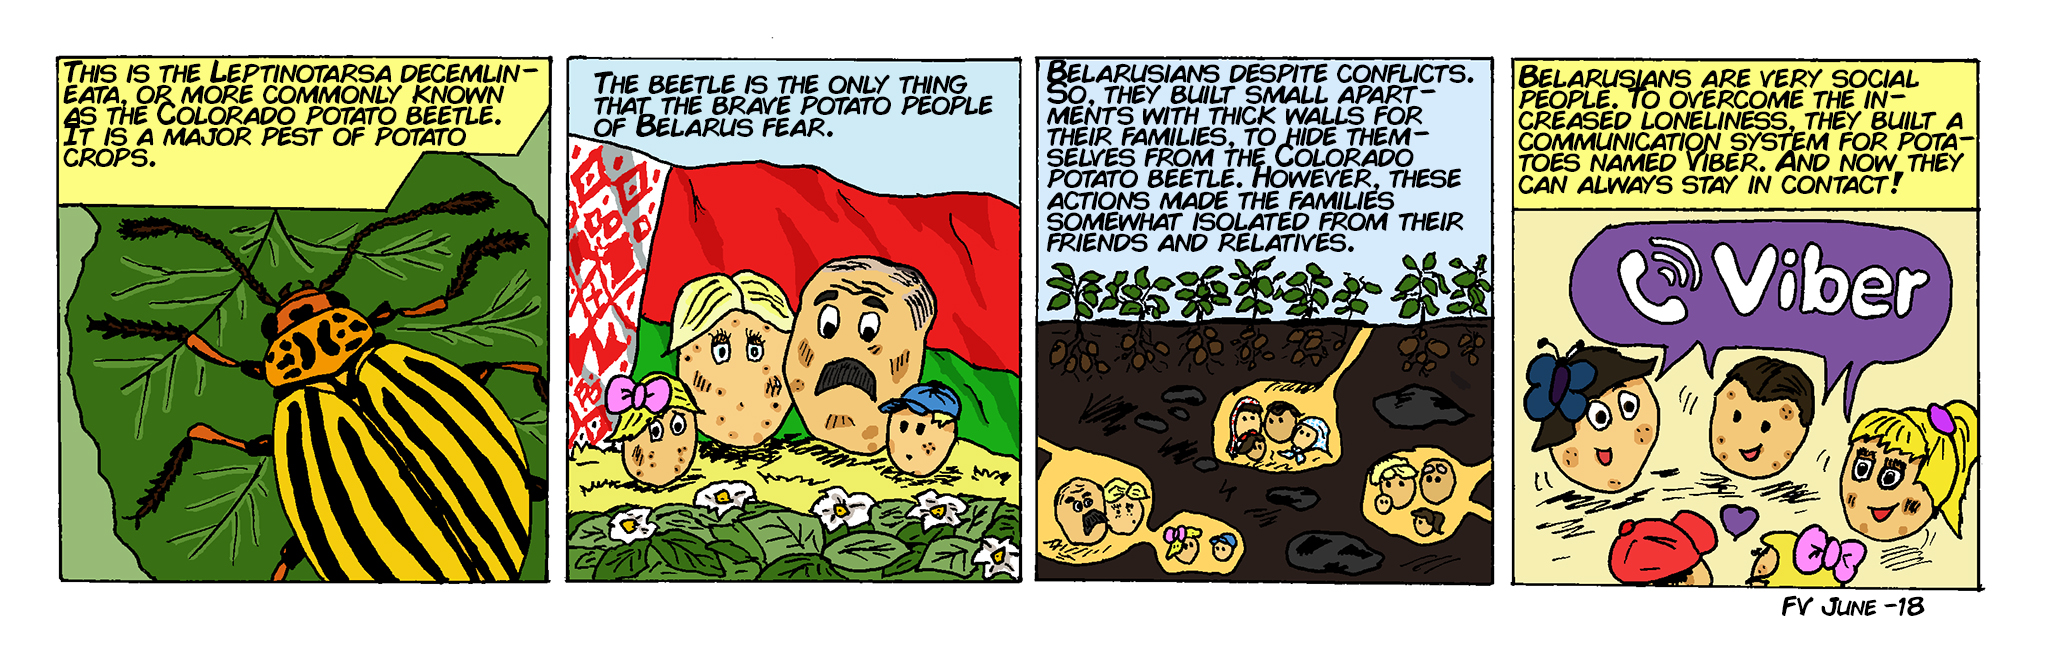 Belarusians as potatoes